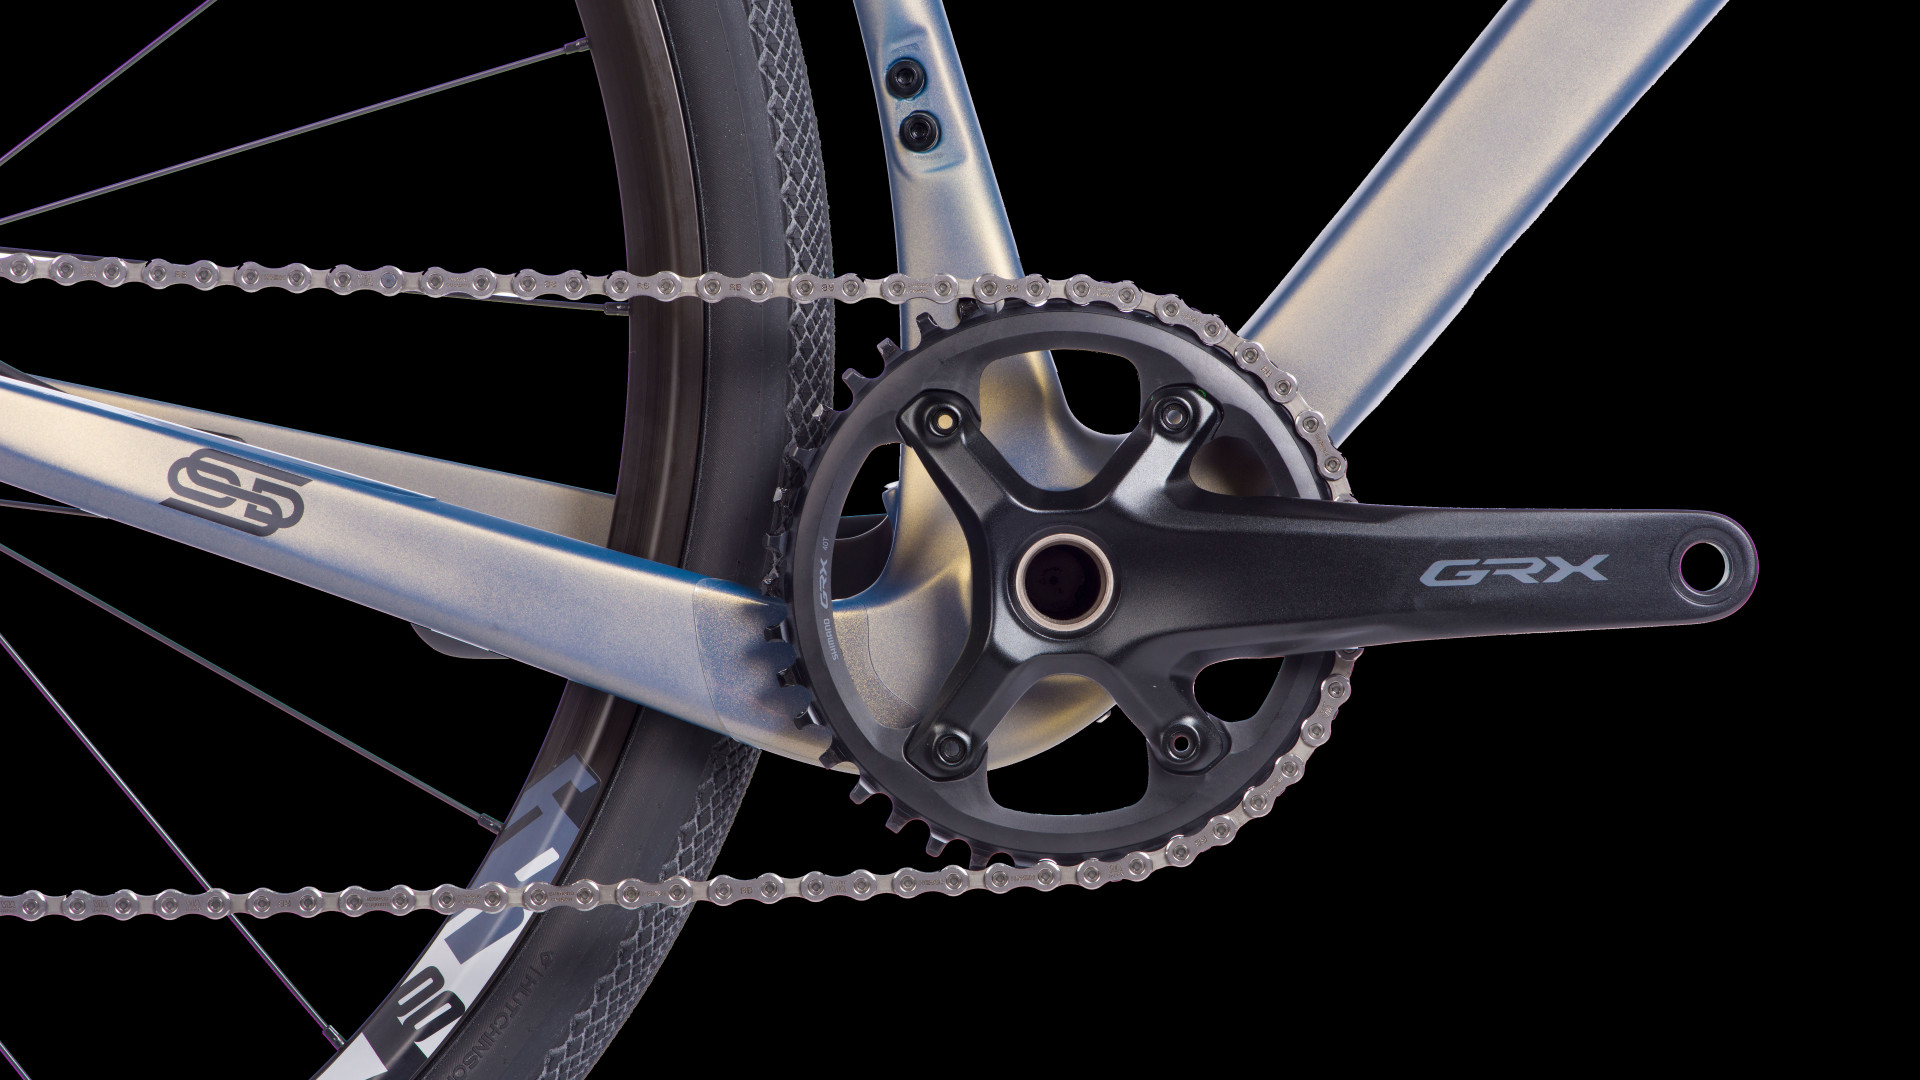 Detailed shot of the New Orro 1x Terra C bike crankset